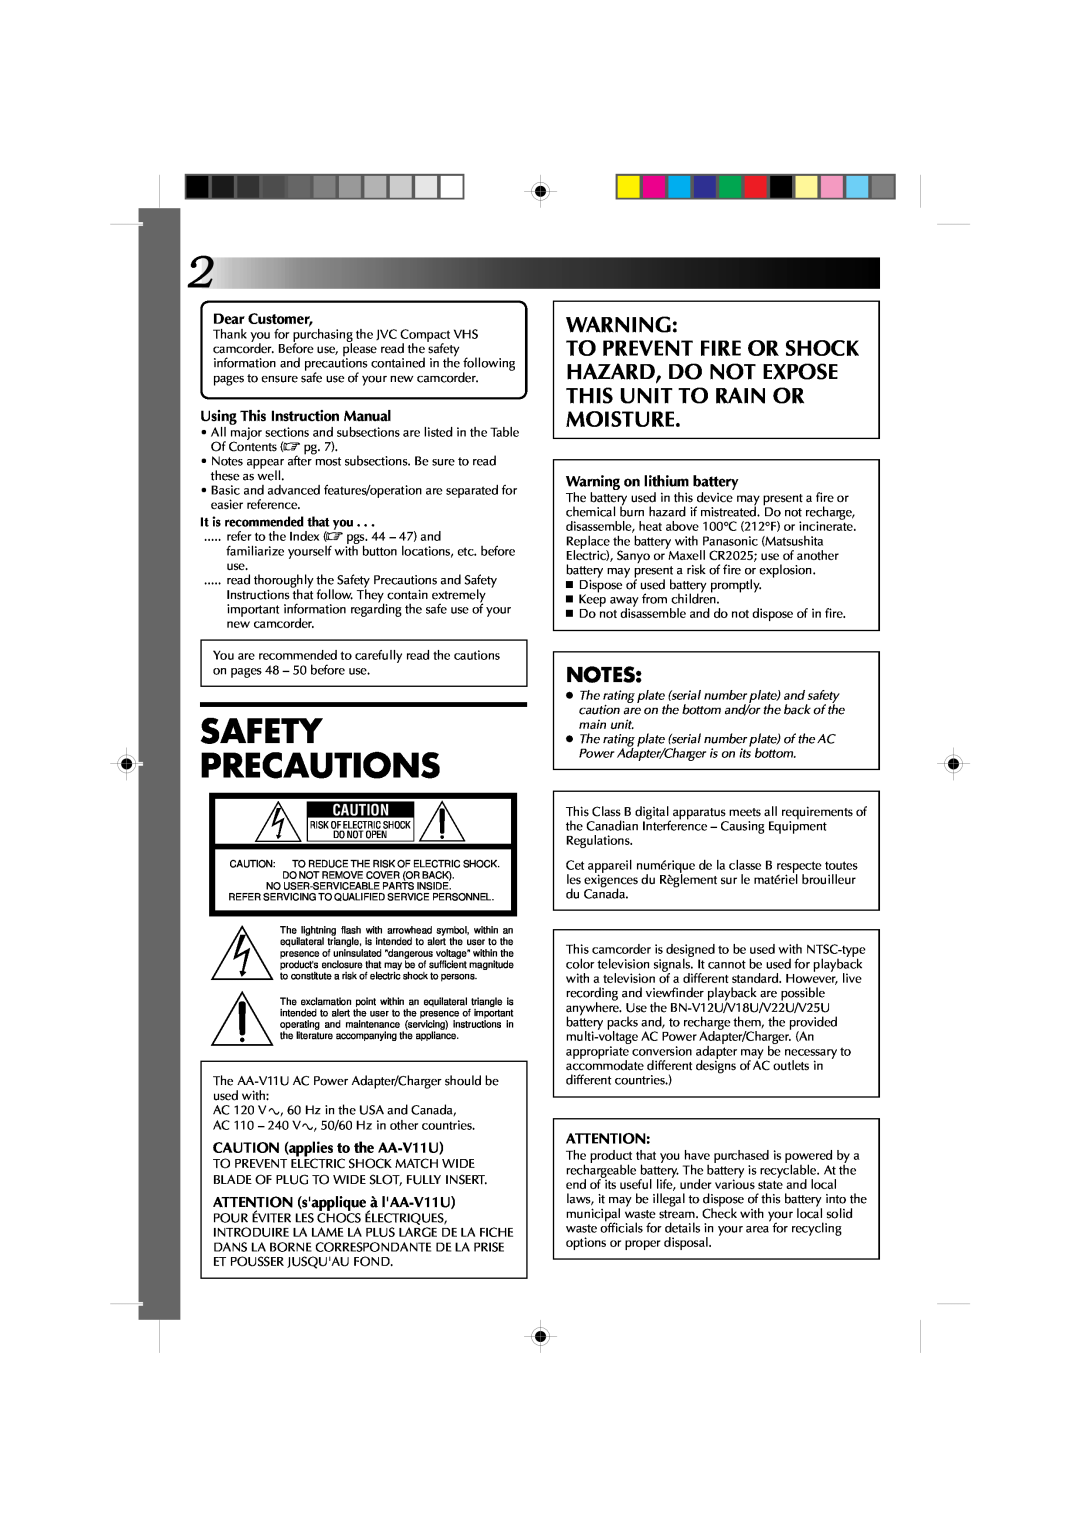 JVC GR-AXM1U manual Safety Precautions, Dear Customer, Using This Instruction Manual, CAUTION applies to the AA-V11U 